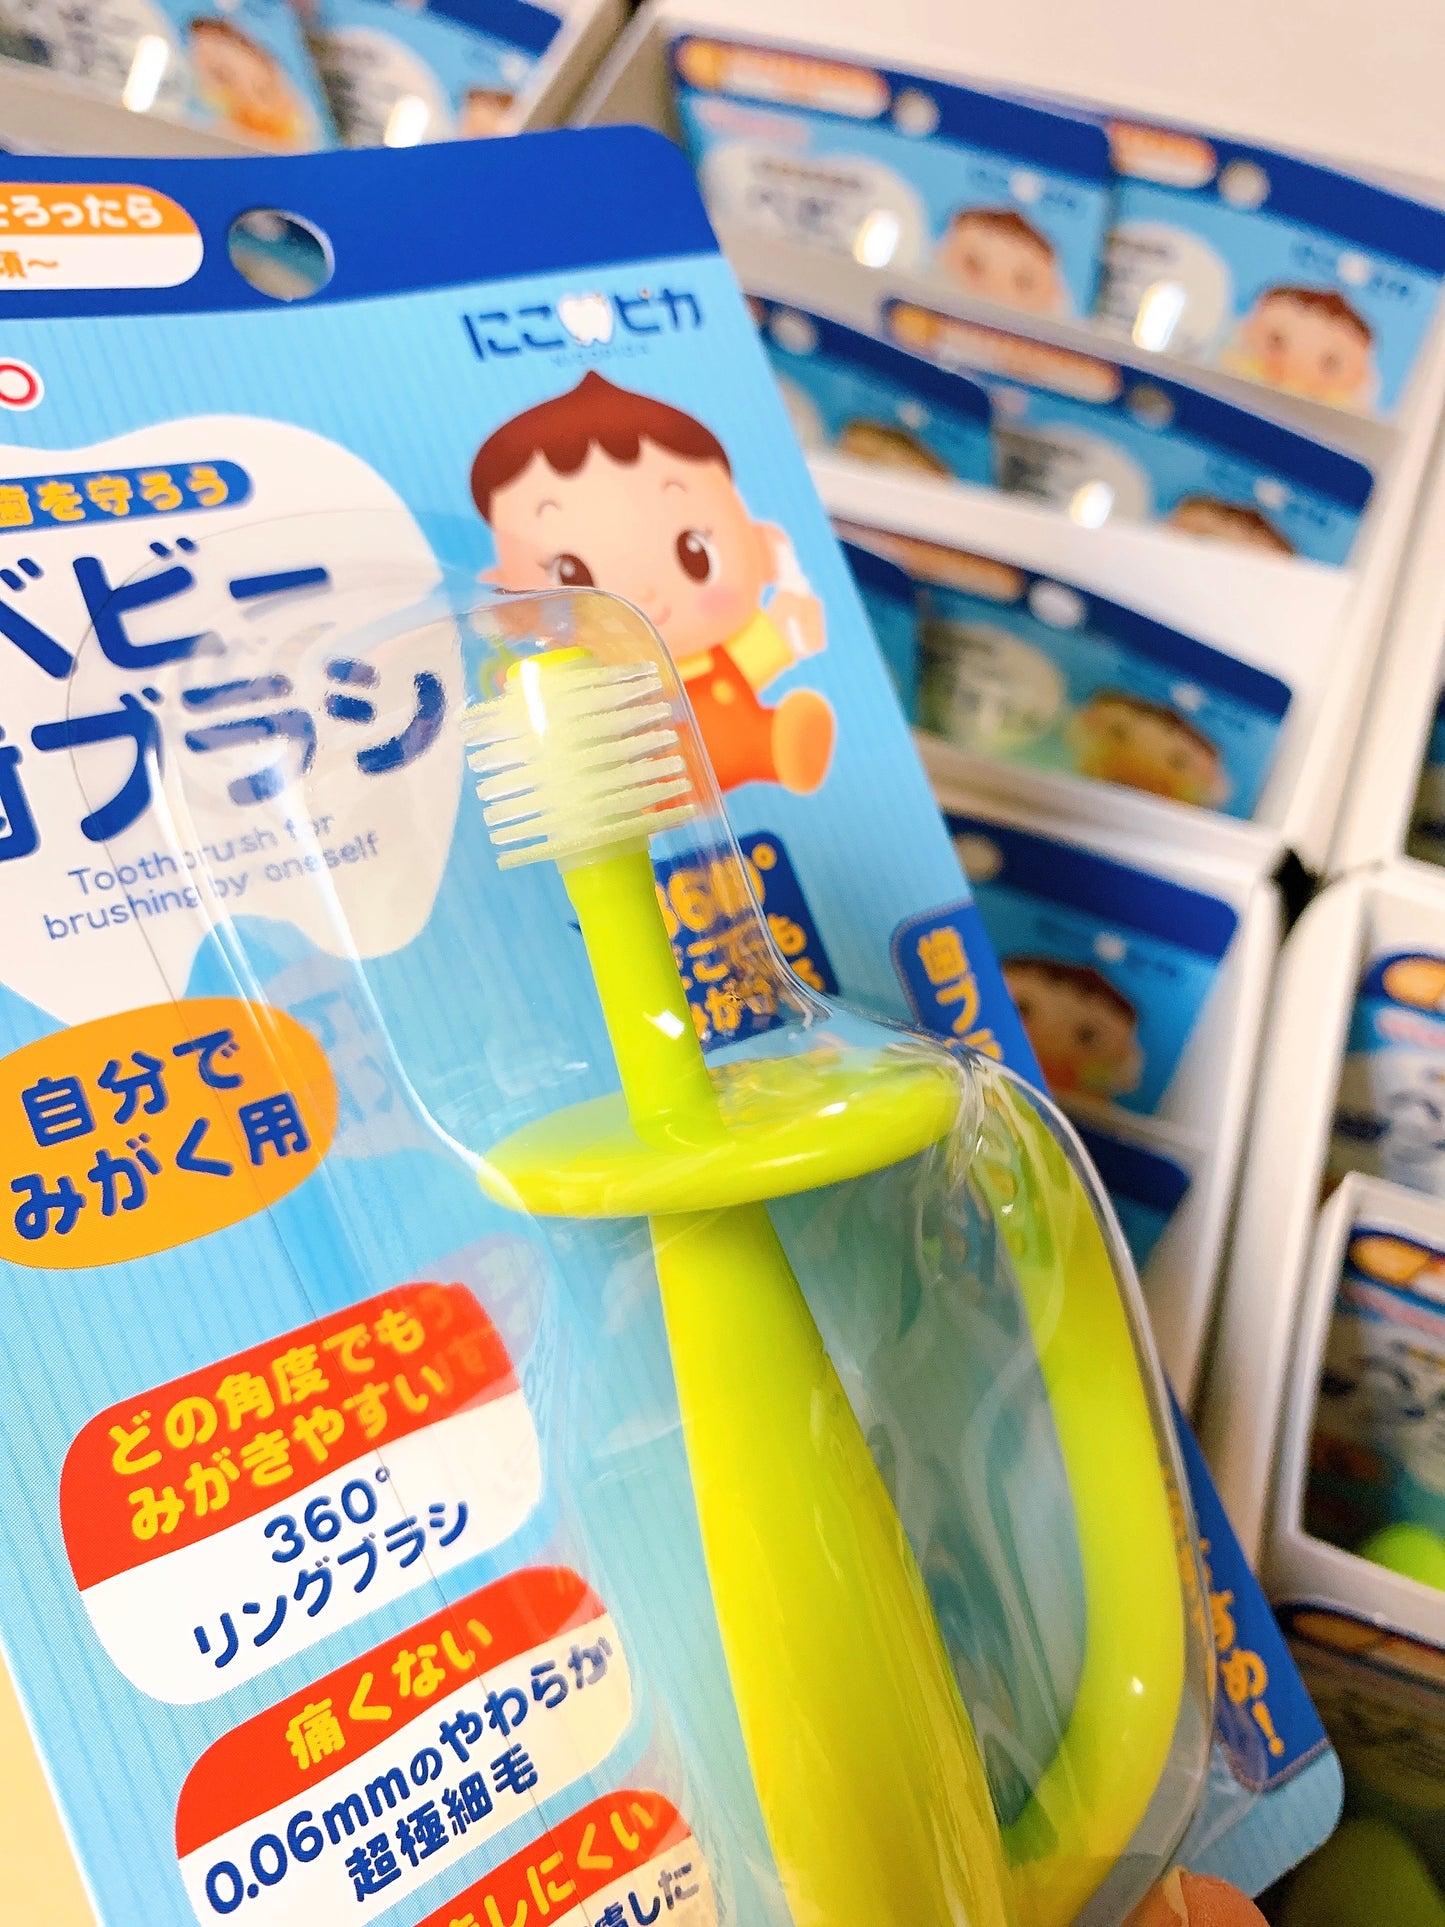 Wakodo Super Soft 360° Training Toothbrush 和光堂360度极细刷毛宝宝训练牙刷 12 month+